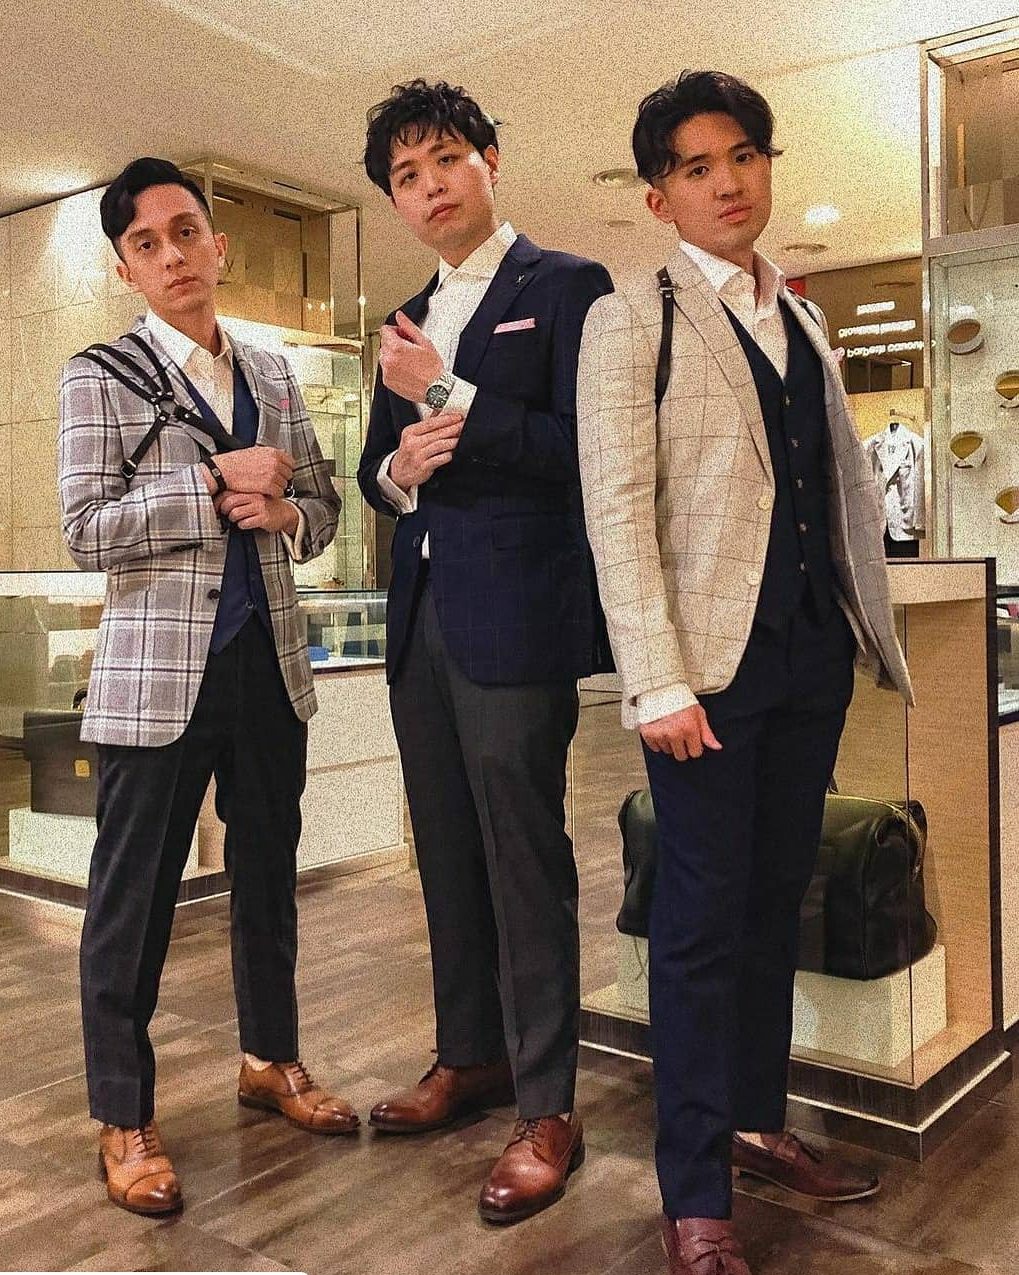 Select Tailoring Success: Custom-Made Men’s Corporate Suits and Uniforms in Kuala Lumpur, Malaysia Tailoring Success: Custom-Made Men’s Corporate Suits and Uniforms in Kuala Lumpur, Malaysia